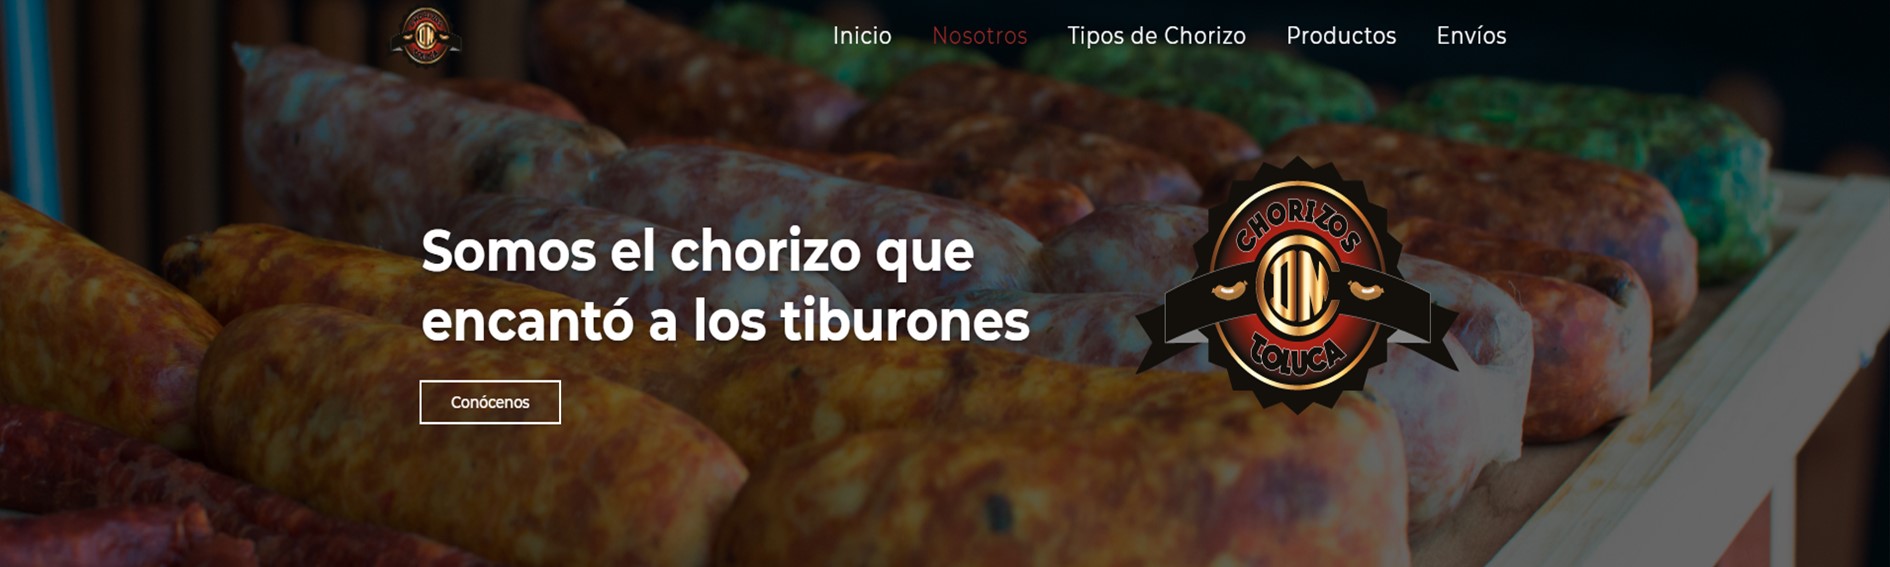 Chorizos DM Toluca